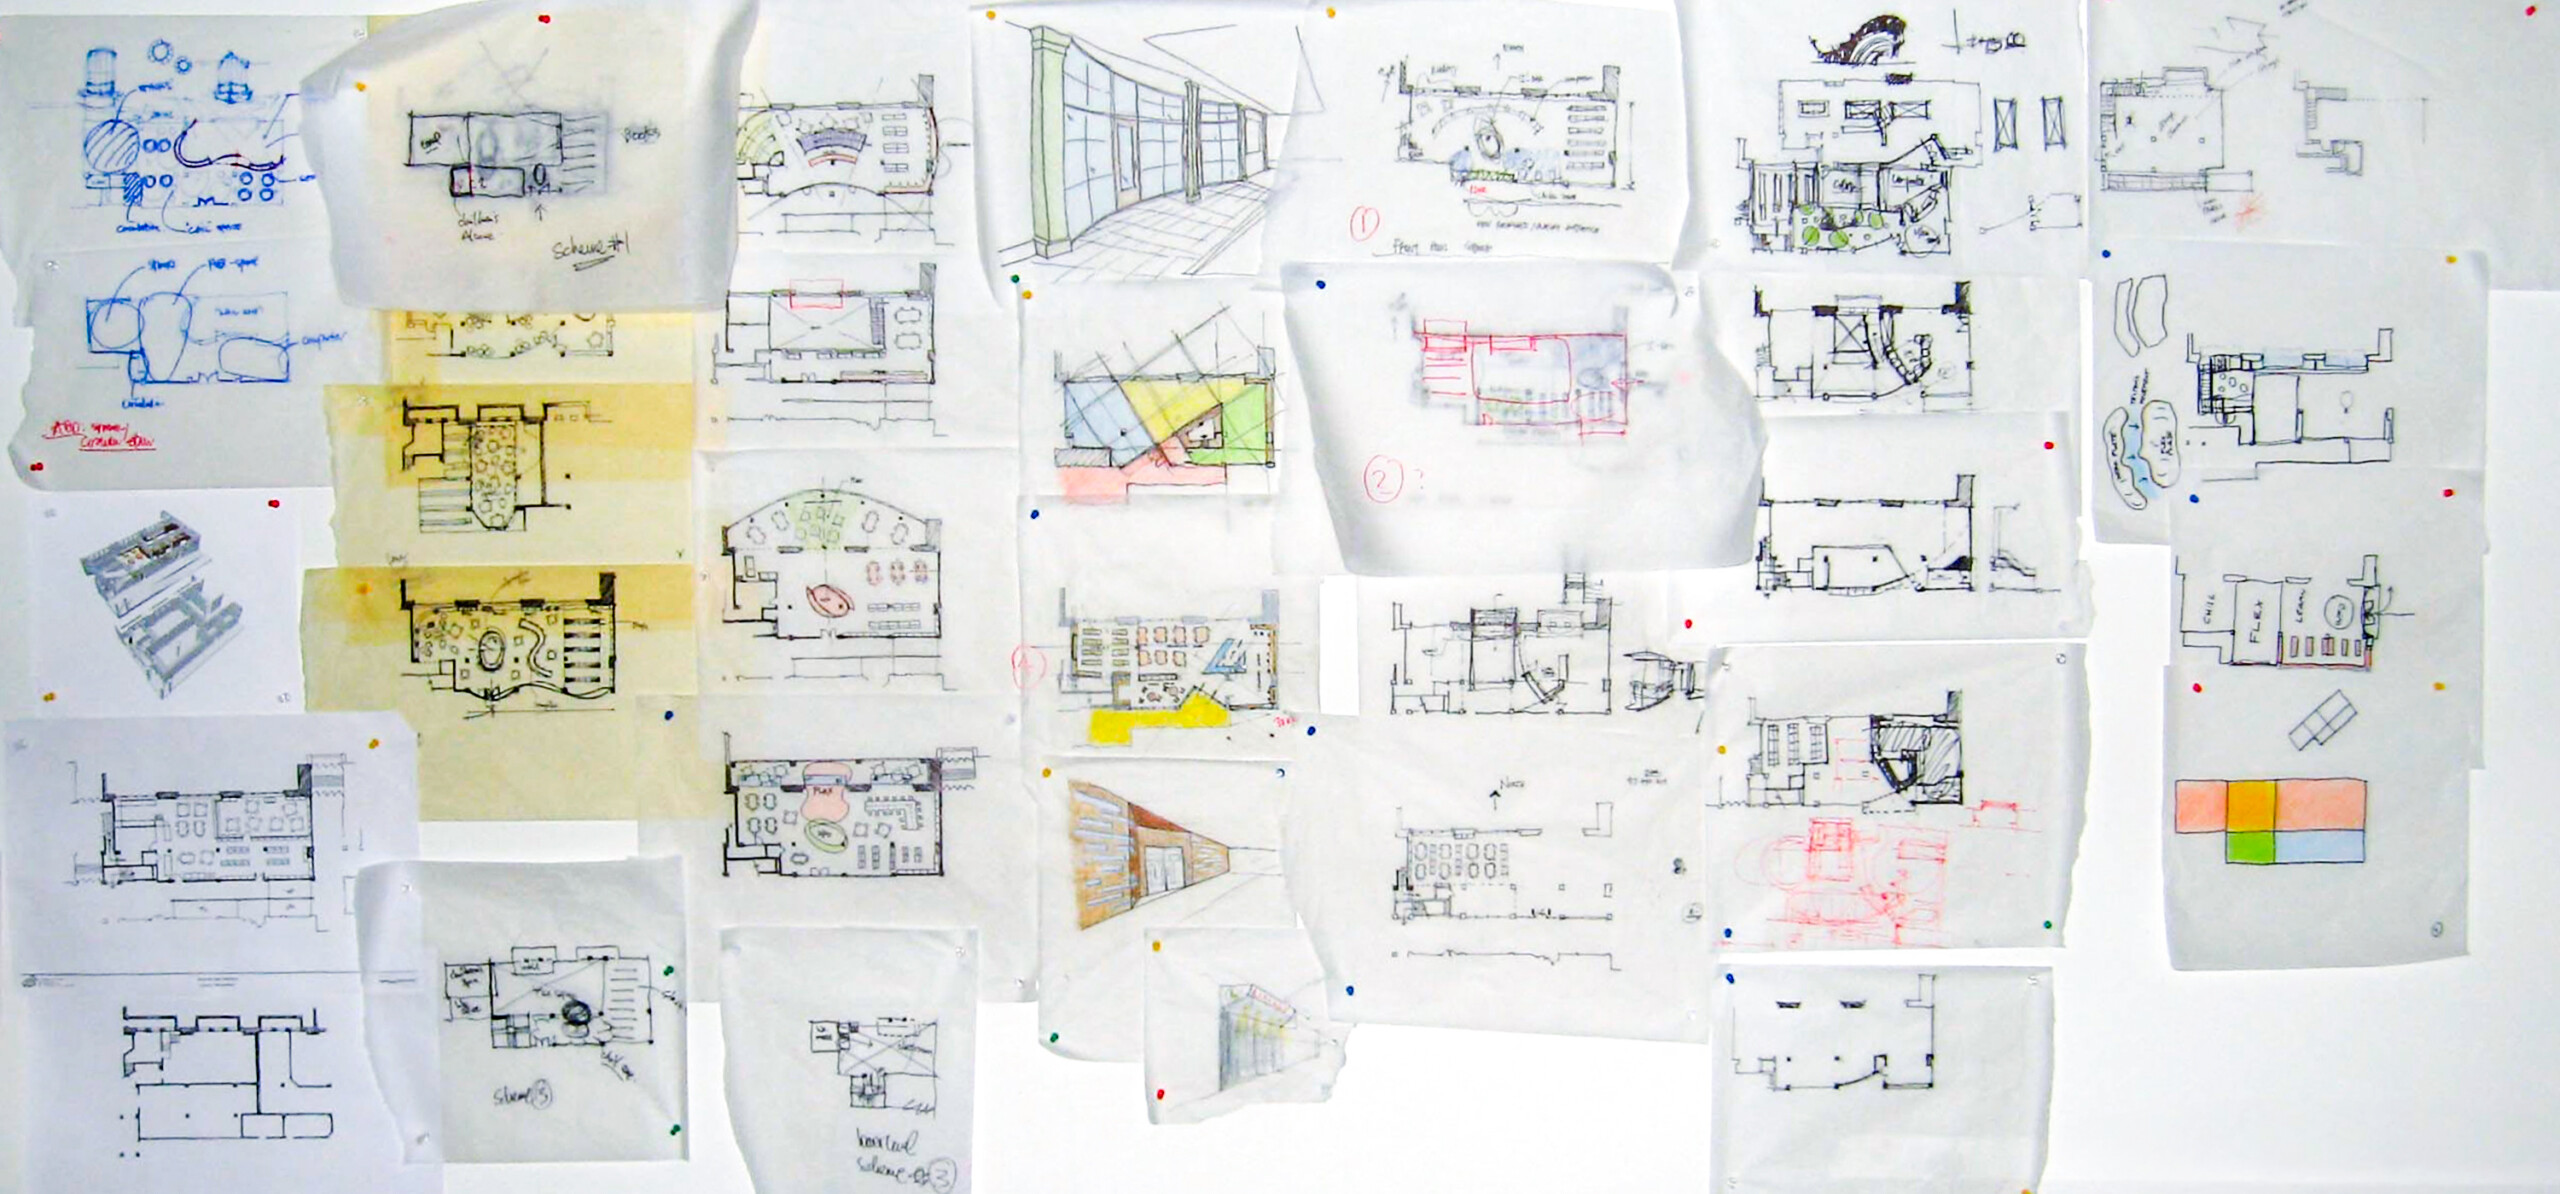 New Visions Public Libraries design process sketches